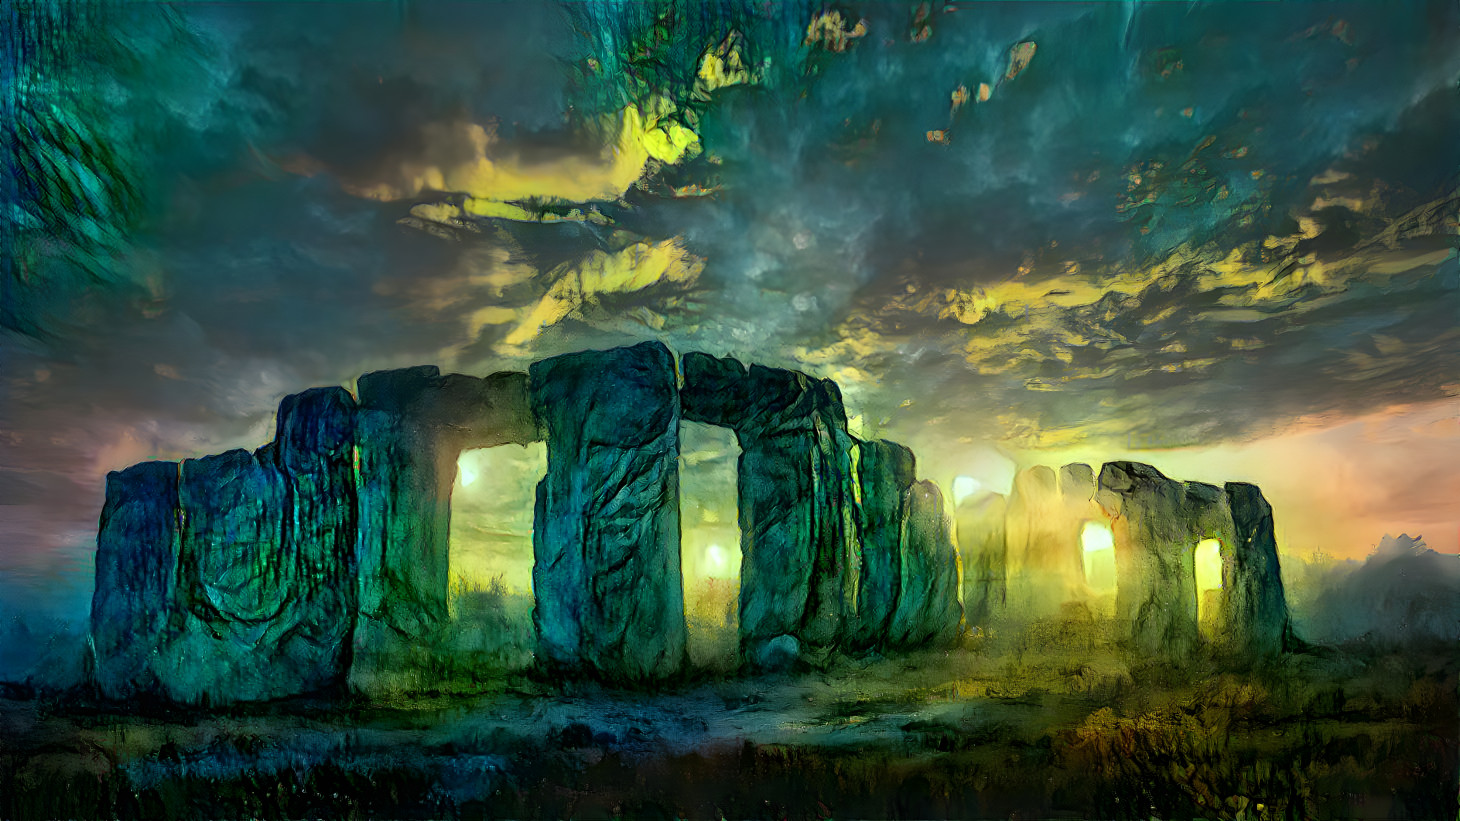 A Stonehenge elsewhere...